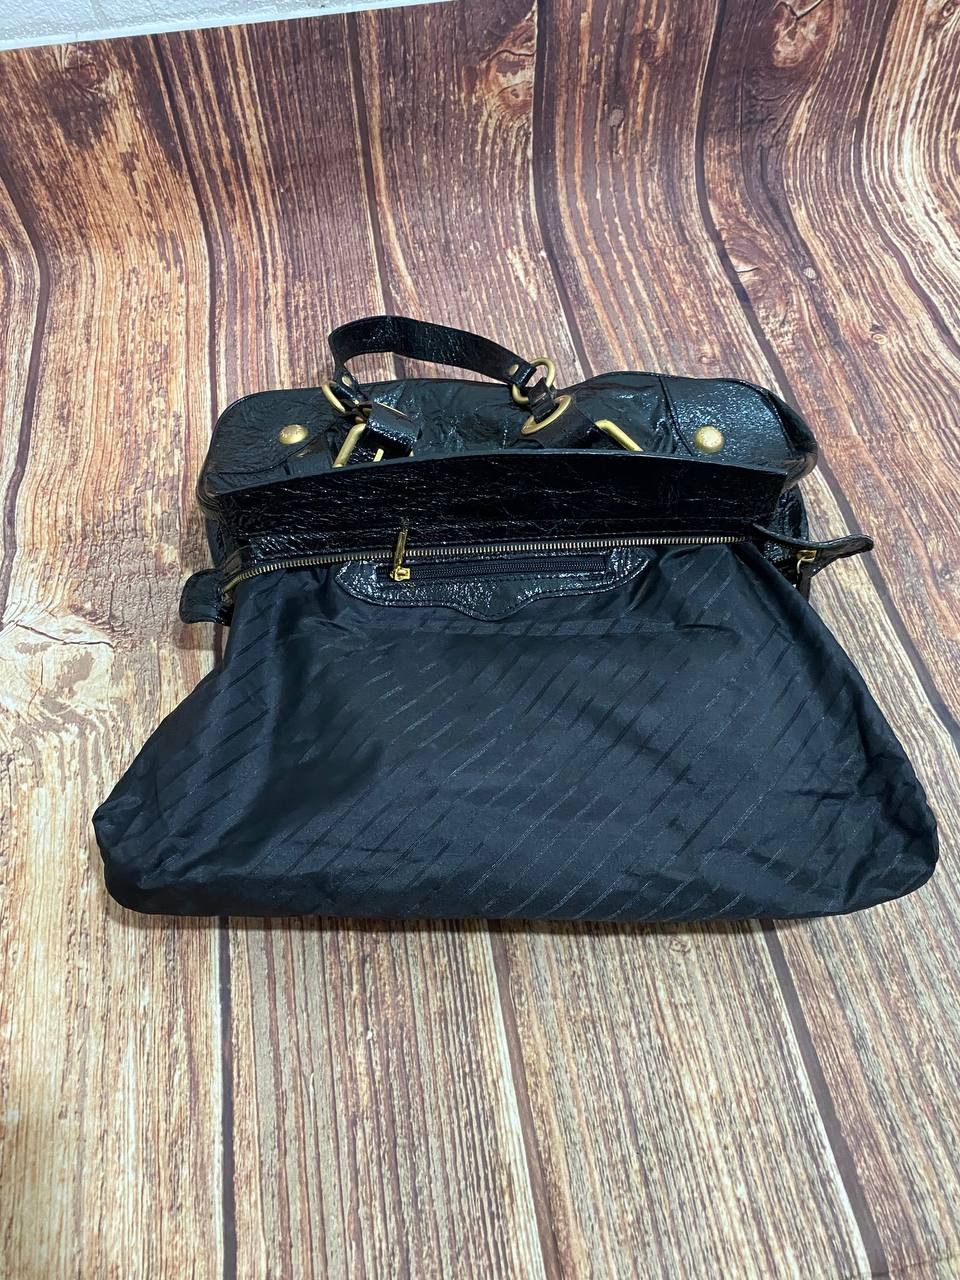 Dolce & Gabbana Vintage Dolce Gabbana leather bag backpack Avangarde Size ONE SIZE - 7 Thumbnail